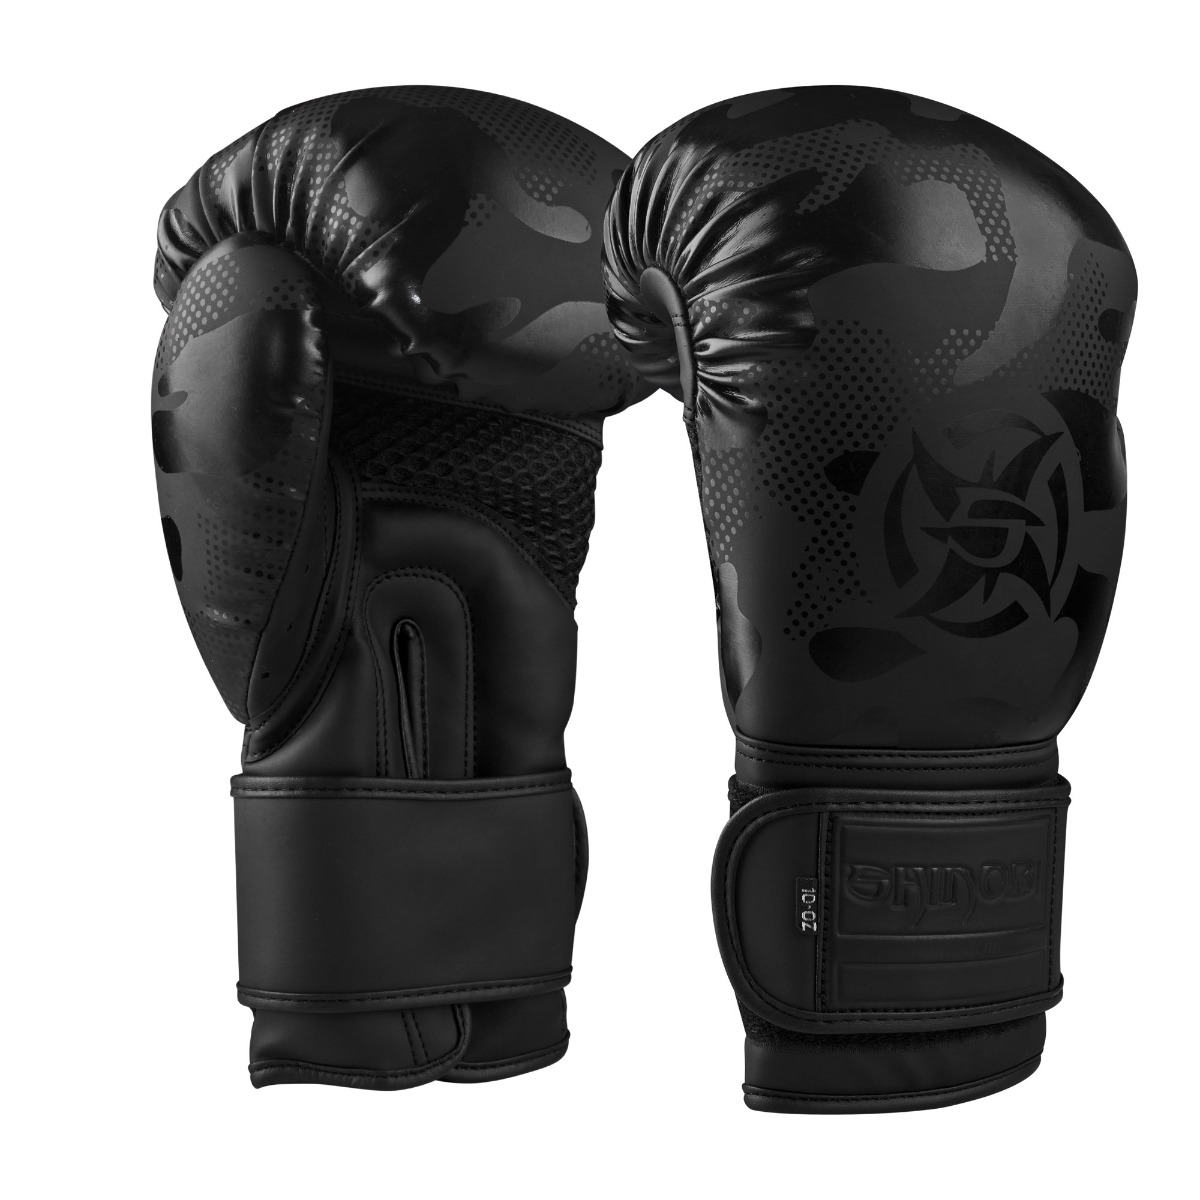 Shinobi Carbon Shadow Boxing Gloves-0